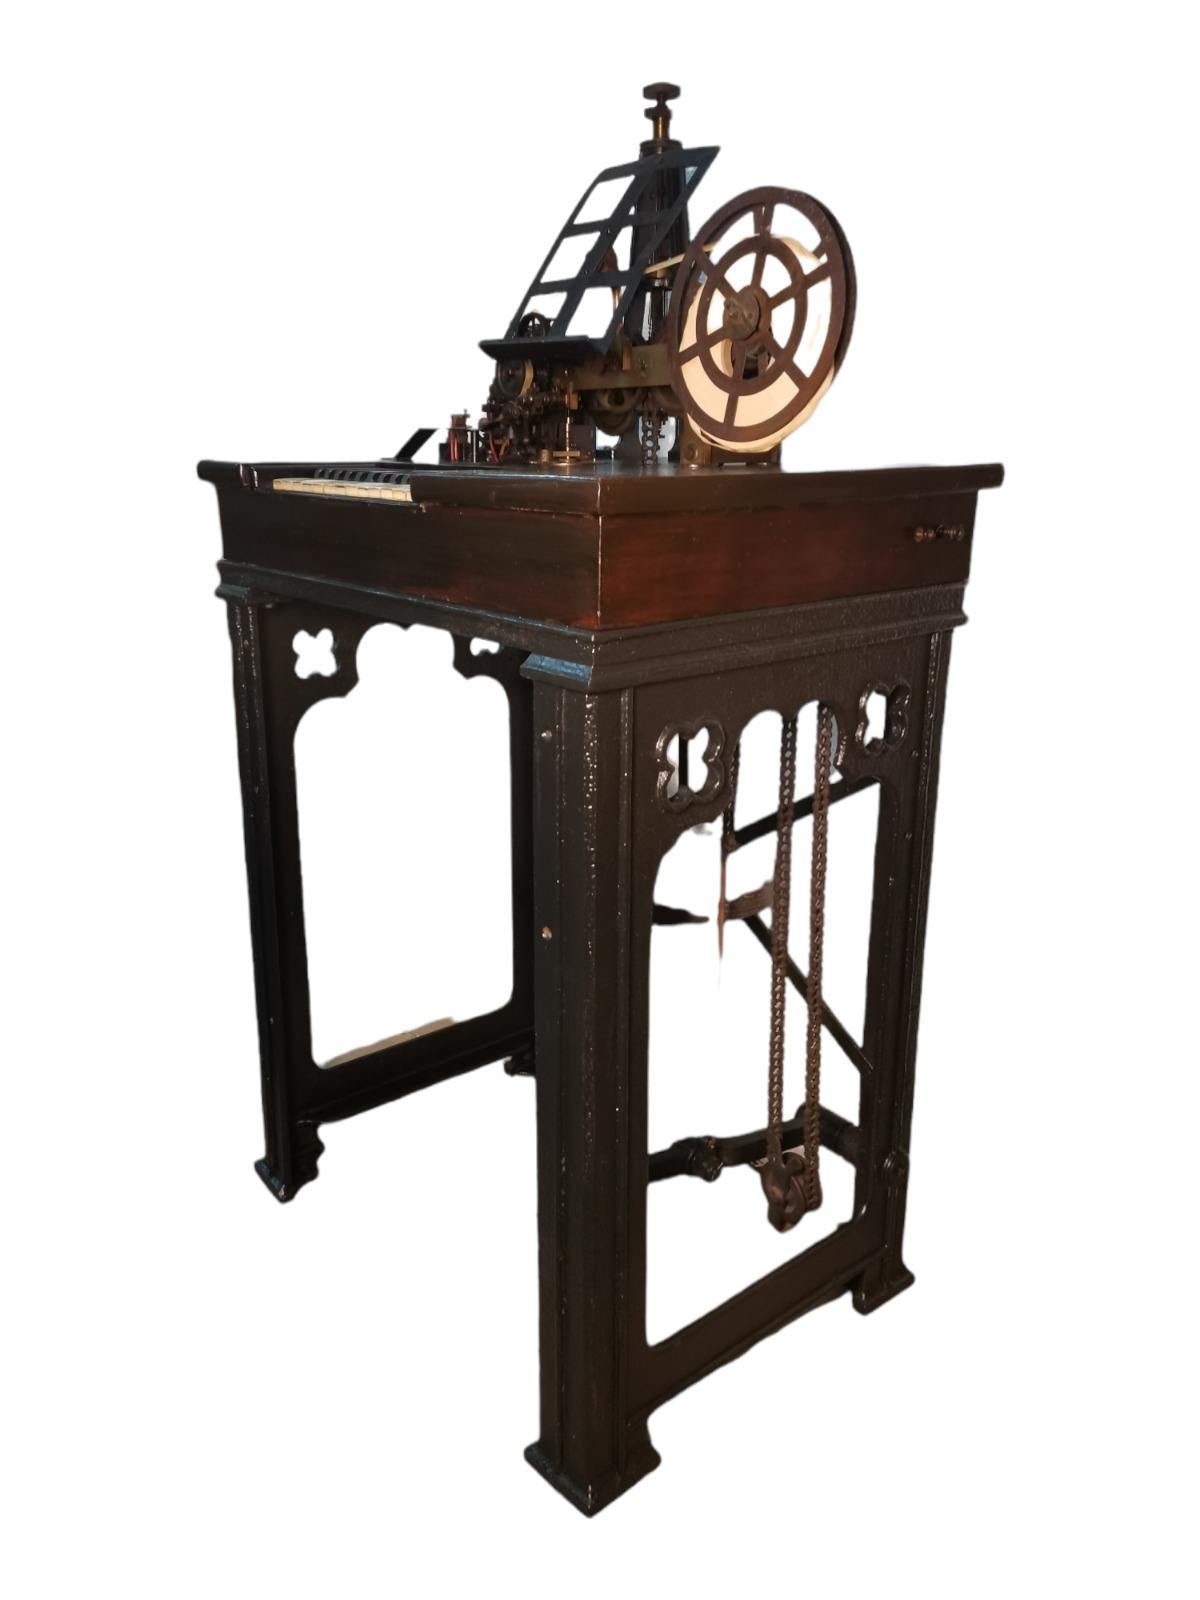 Wood Hughes  Telegraph Set Built by Siemens & Halske 19th Century For Sale